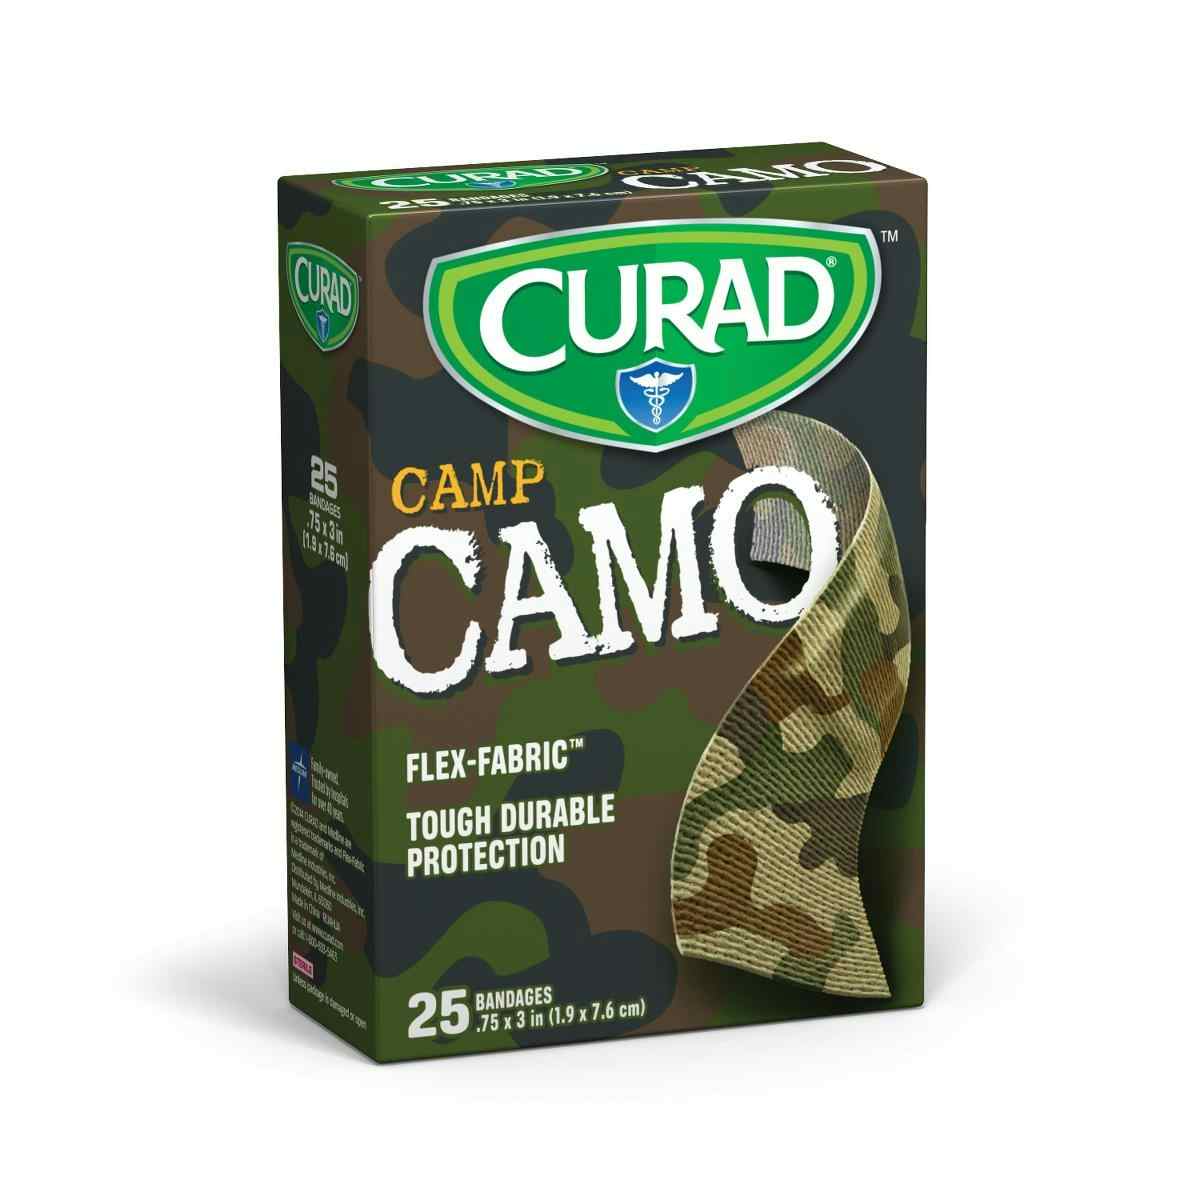 Curad Camp Camo Flex-Fabric Adhesive Bandages, CUR45701RBZ, Green - 3/4" X 3" - Box of 25